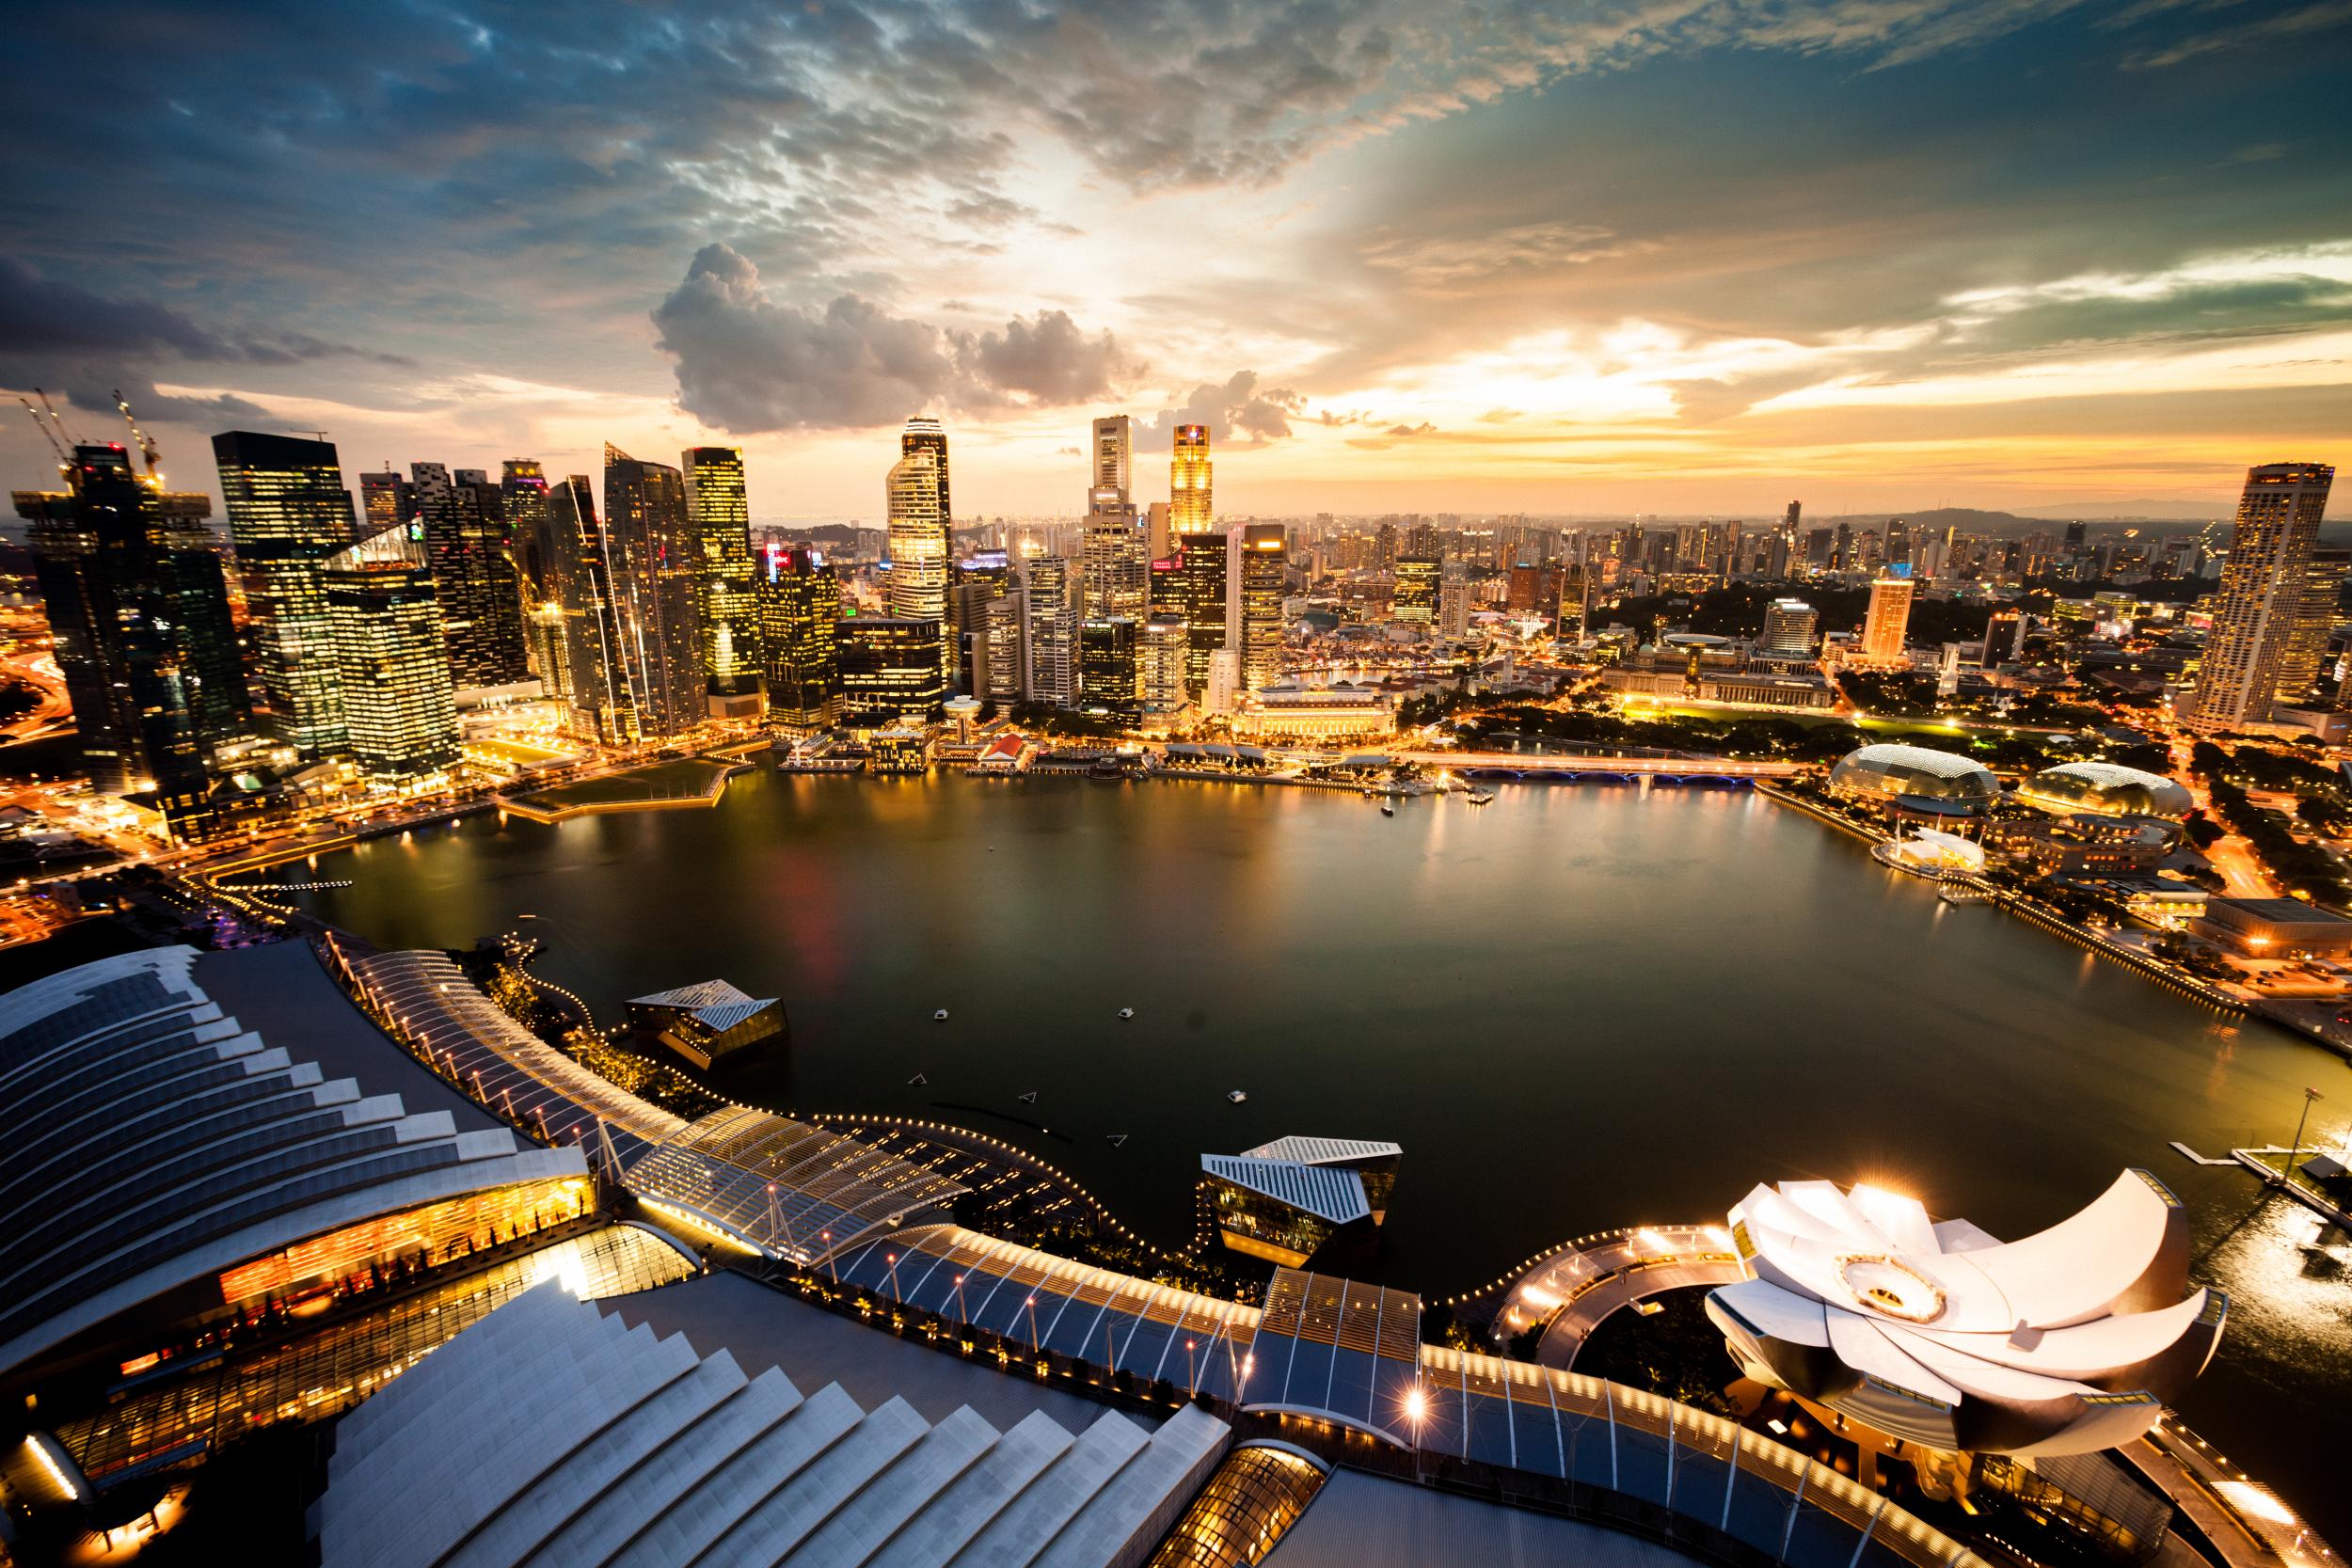 The glittering skyscrapers lining Singapore’s marina